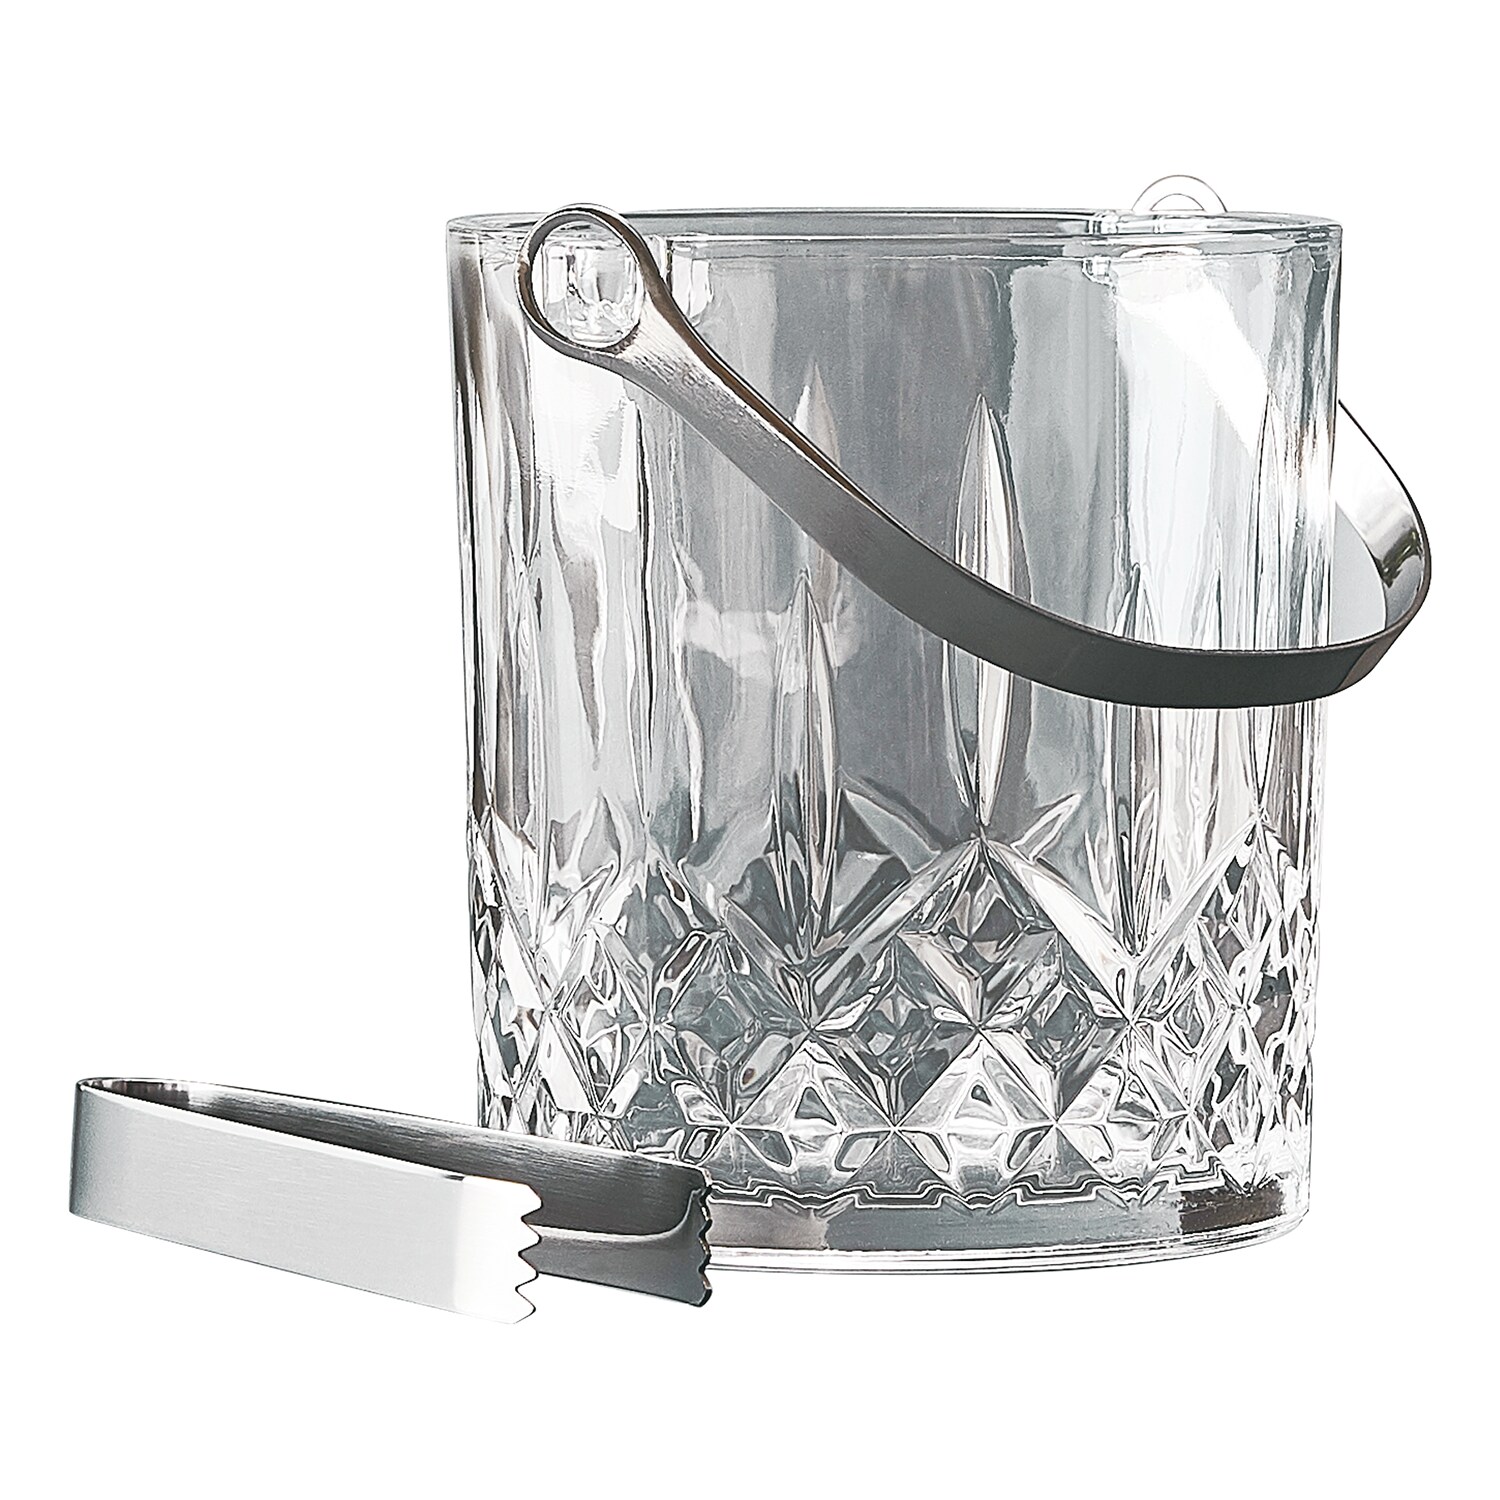 https://royaldesign.co.uk/image/6/aida-harvey-ice-bucket-with-pliers-0